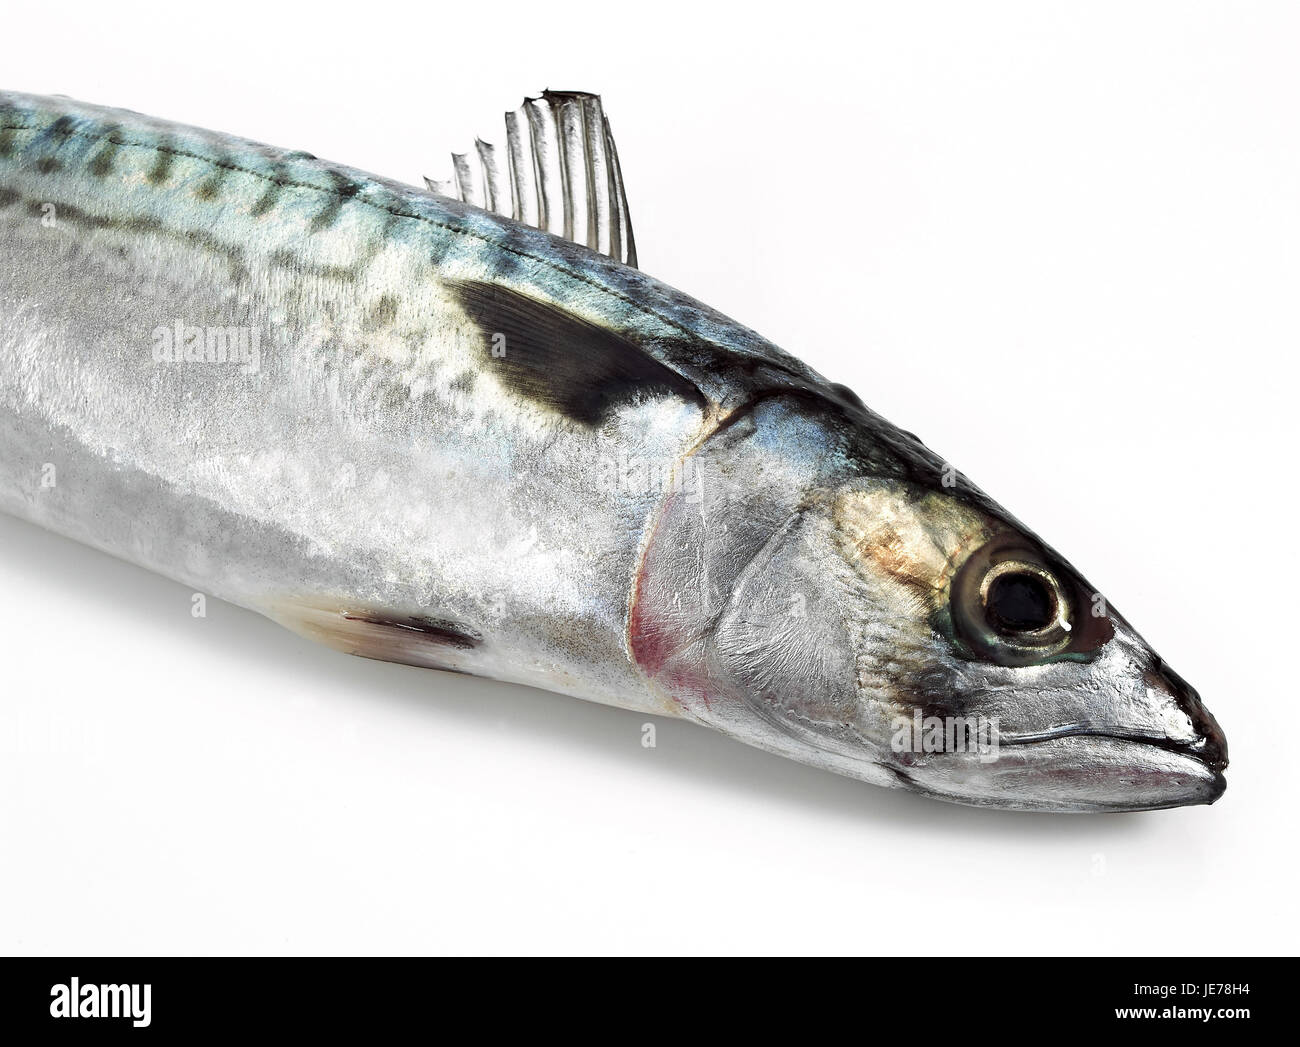 Mackerel, Scomber scombrus, fresh fish, white background, Stock Photo